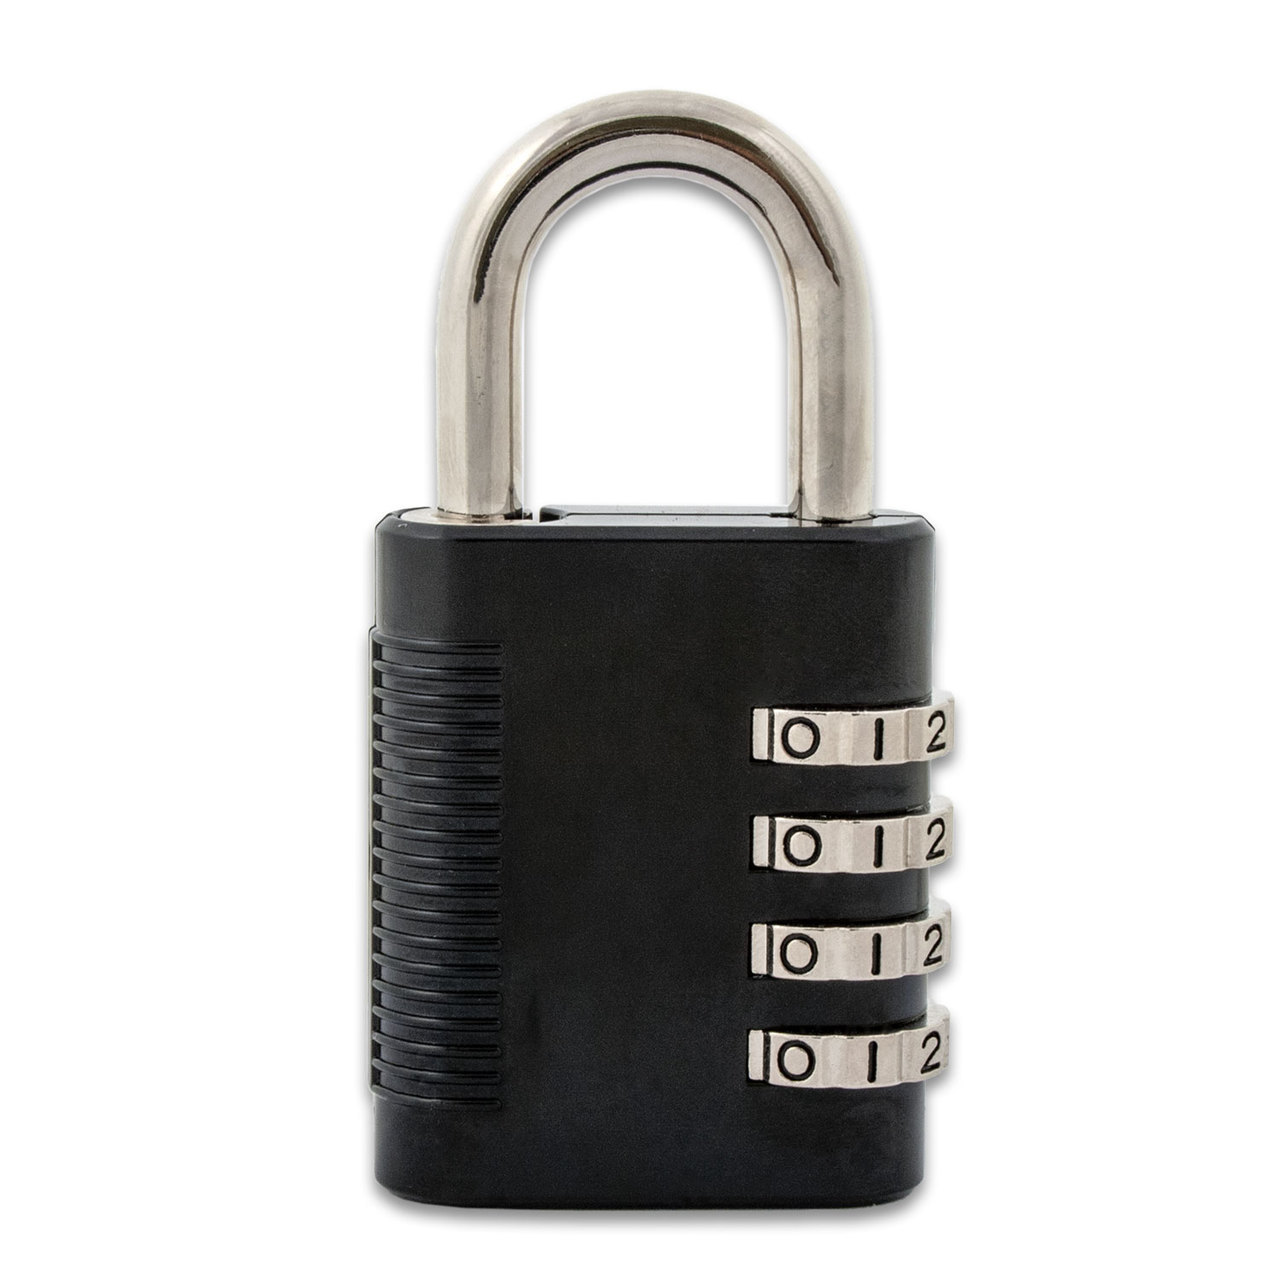 a secure combination padlock